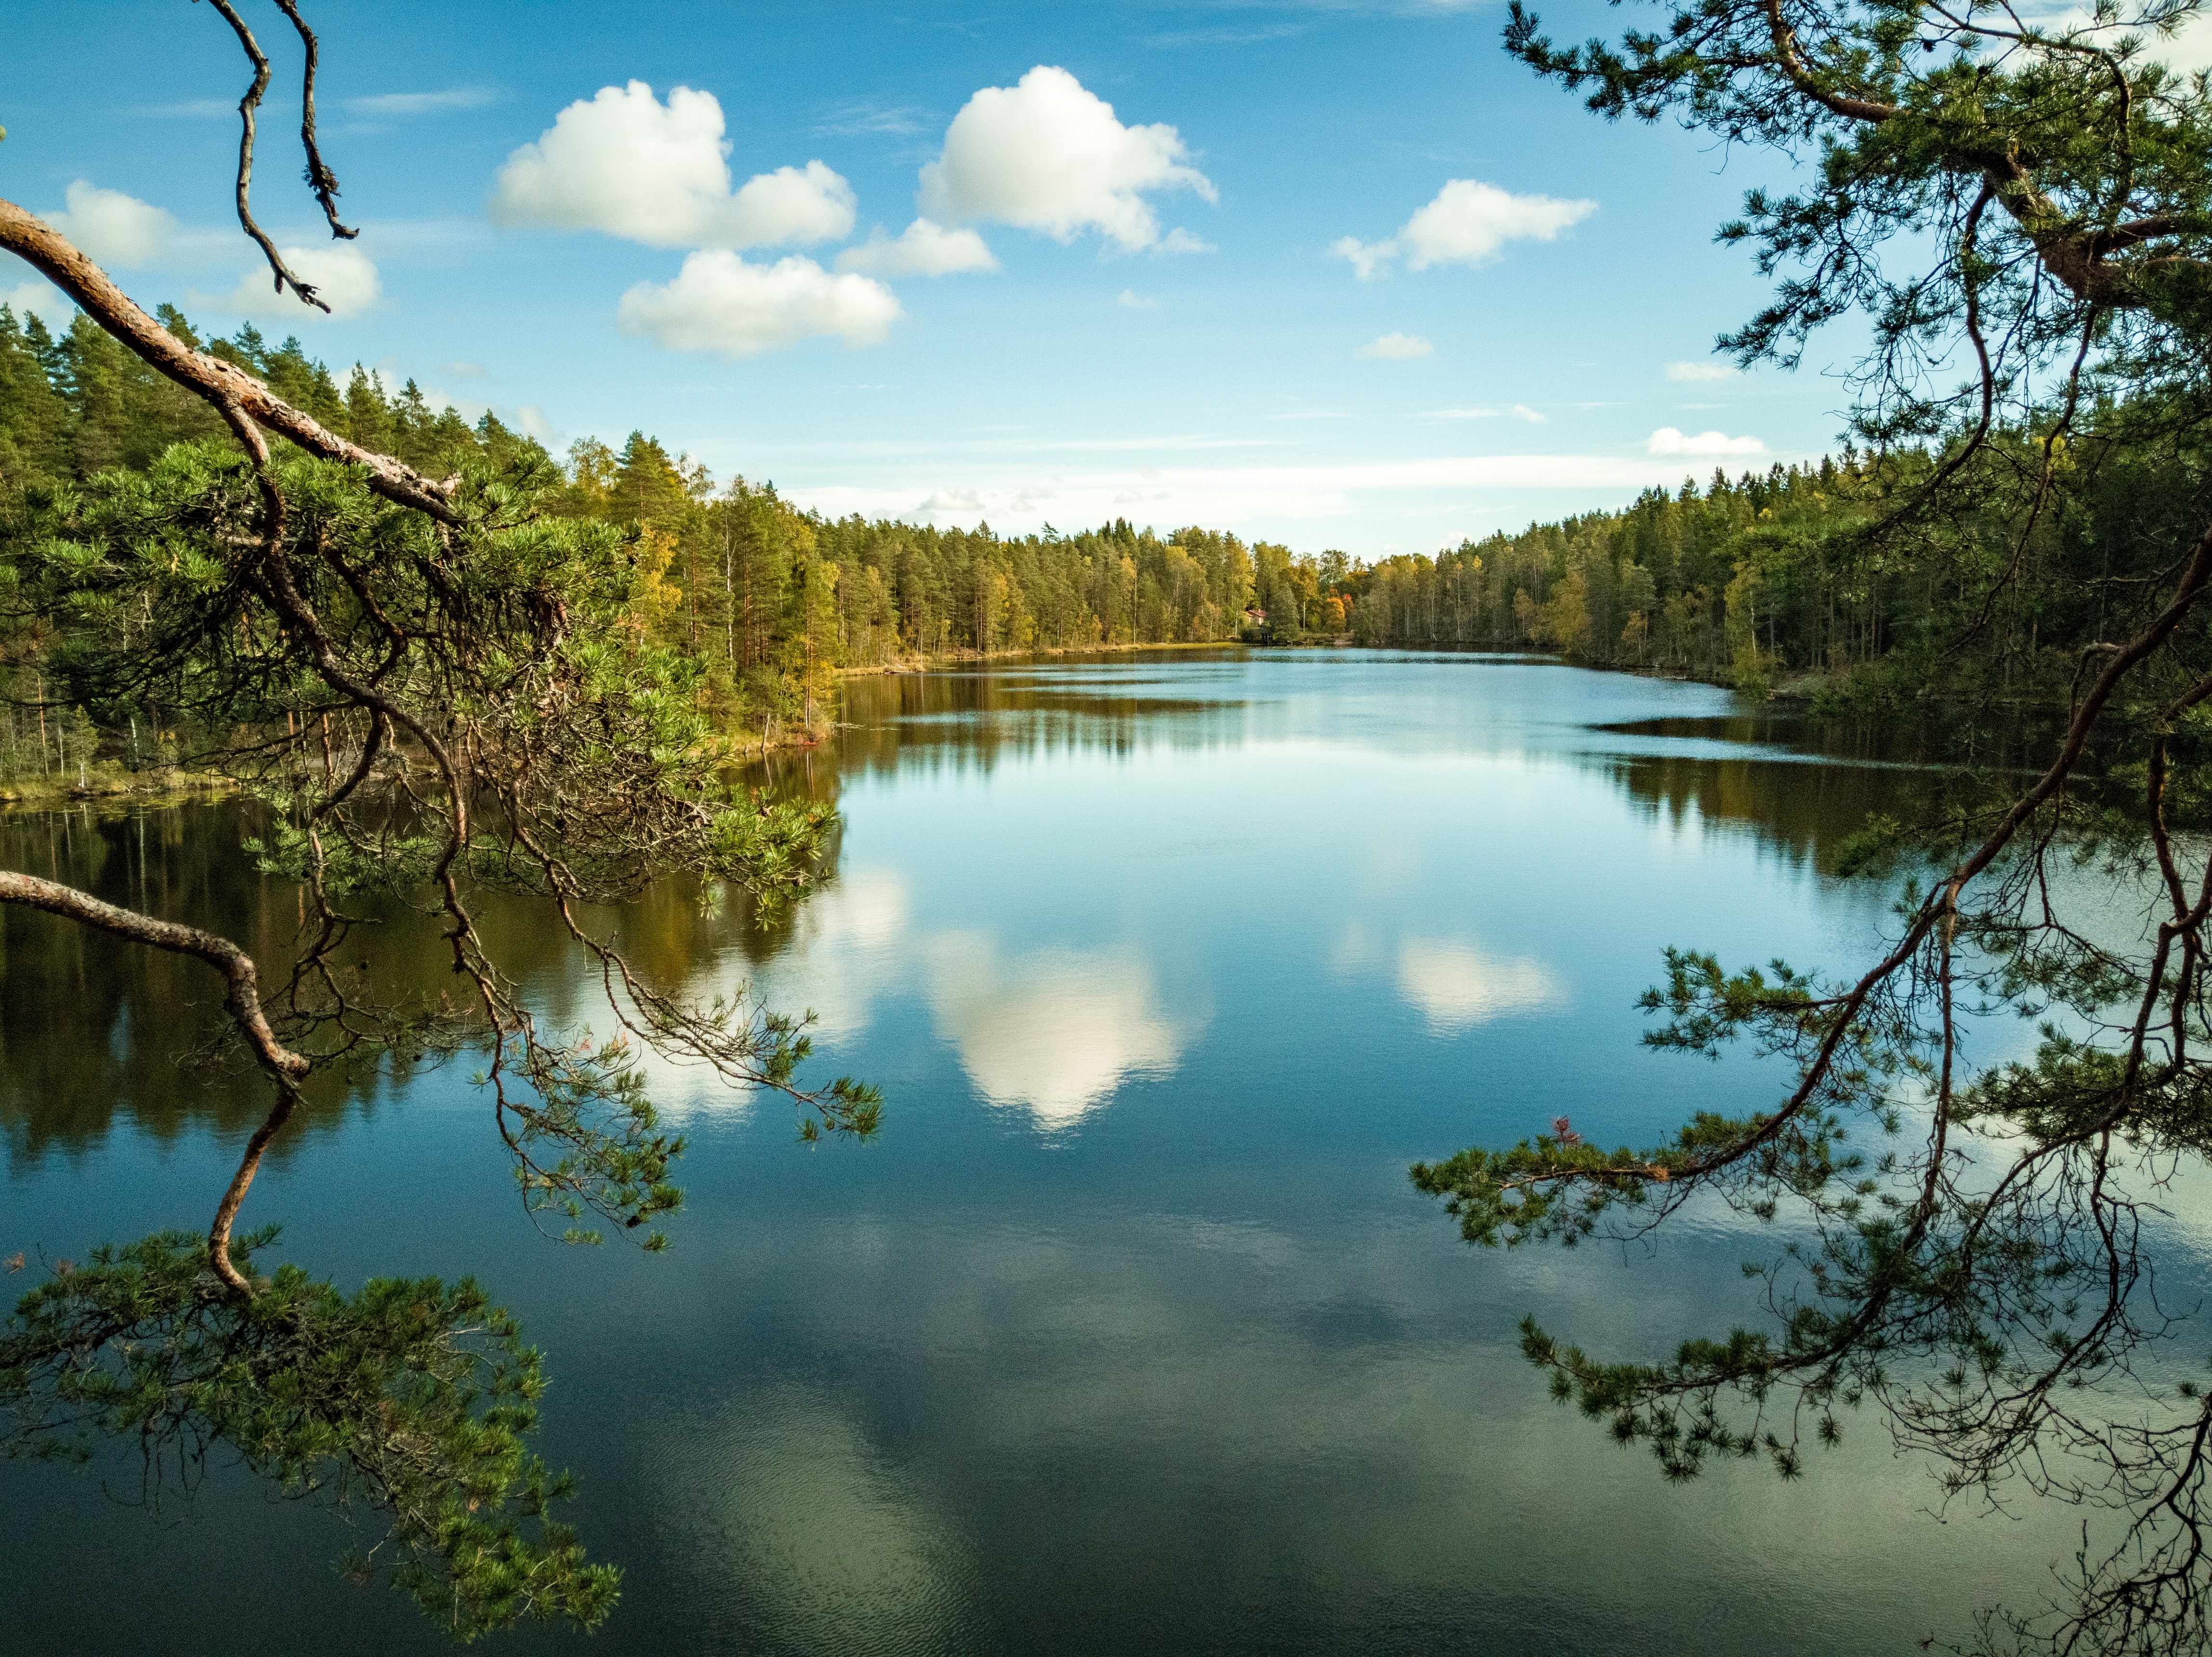 Finland in September